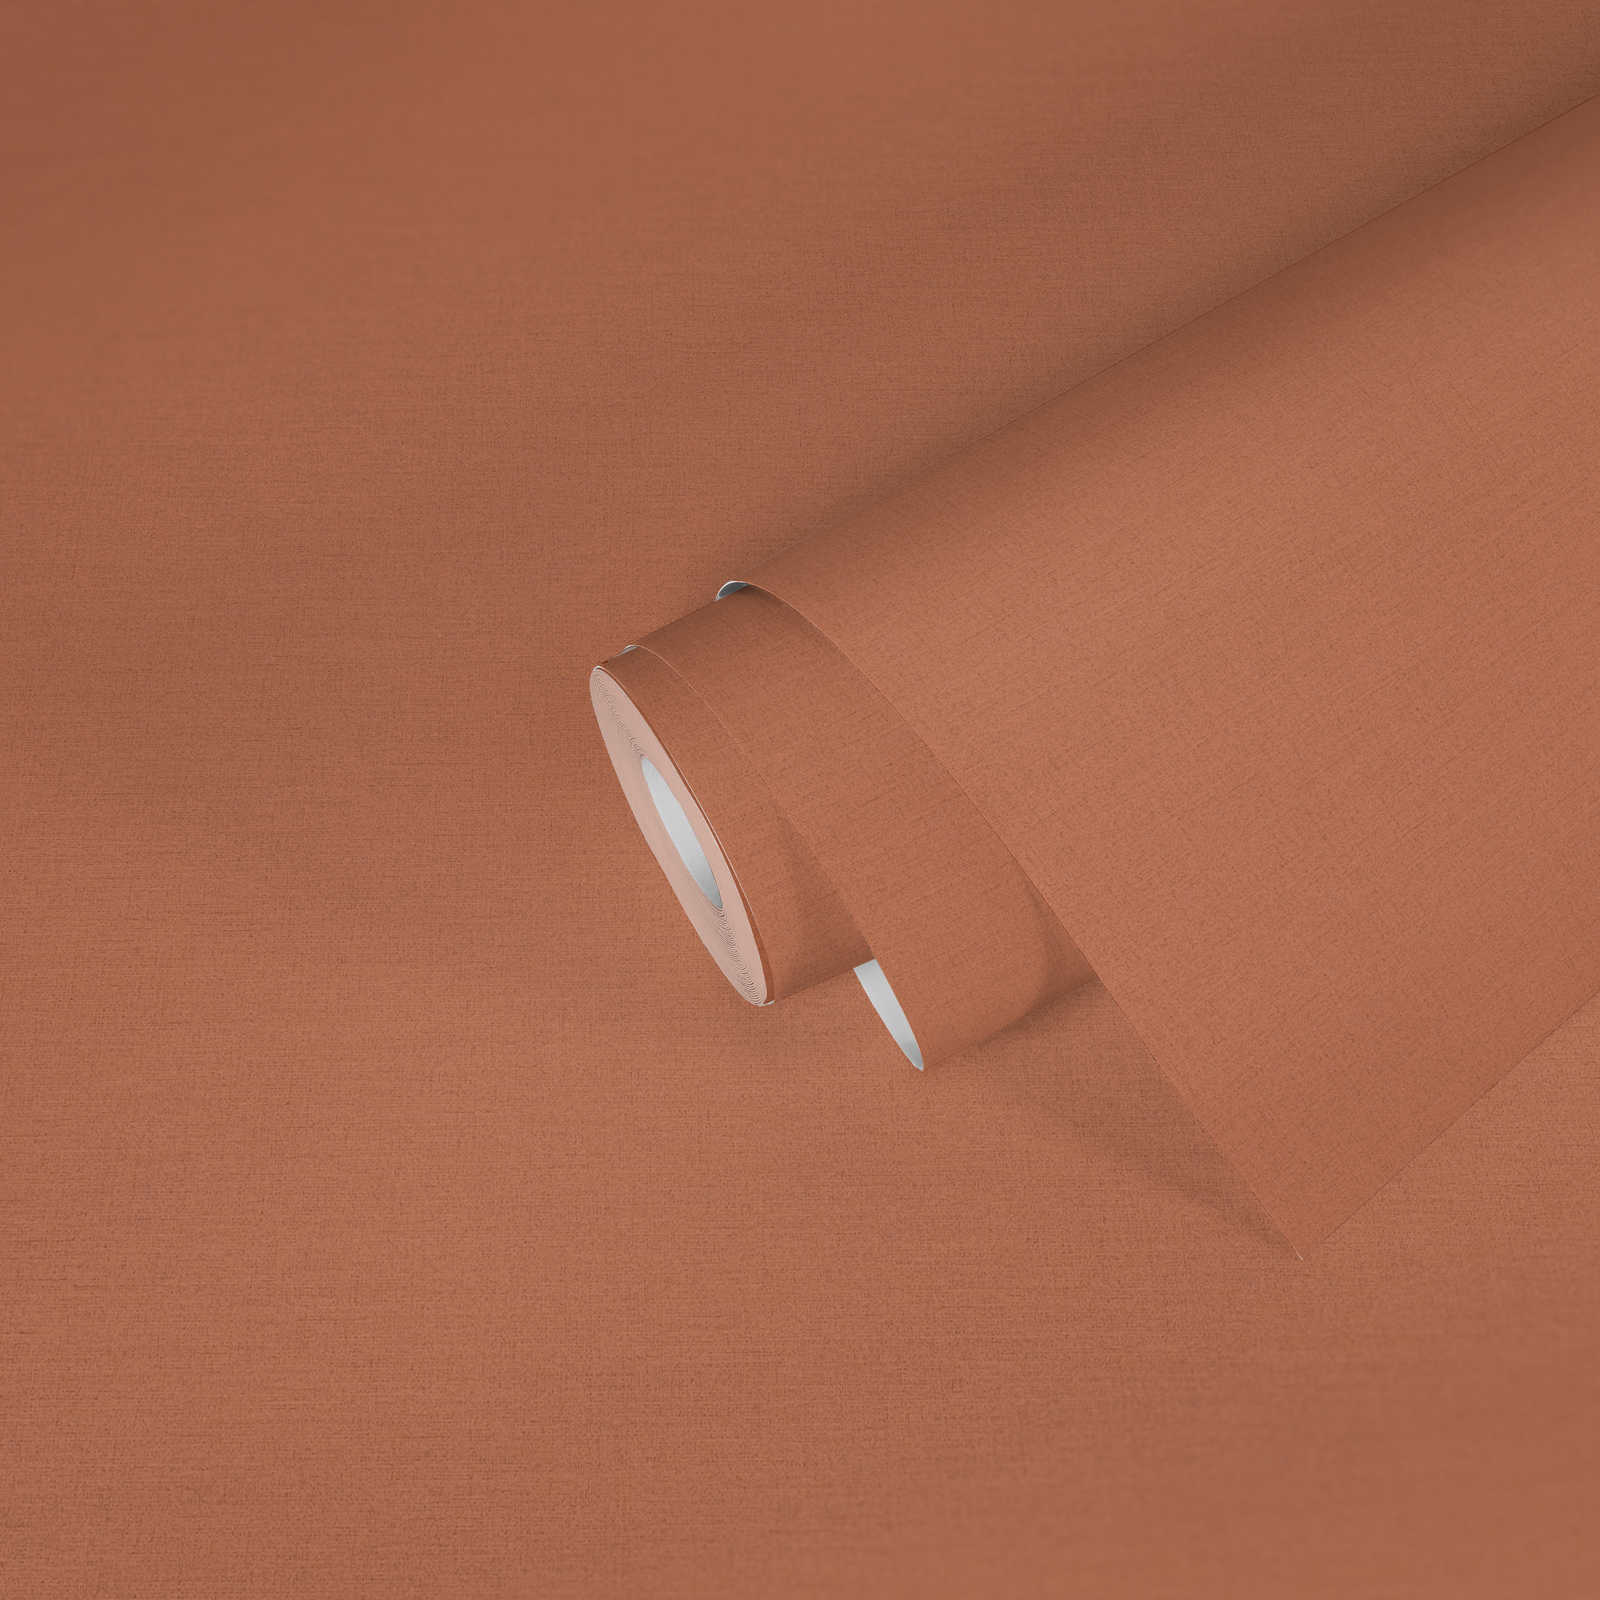             Papier peint imitation lin, style discret - orange
        